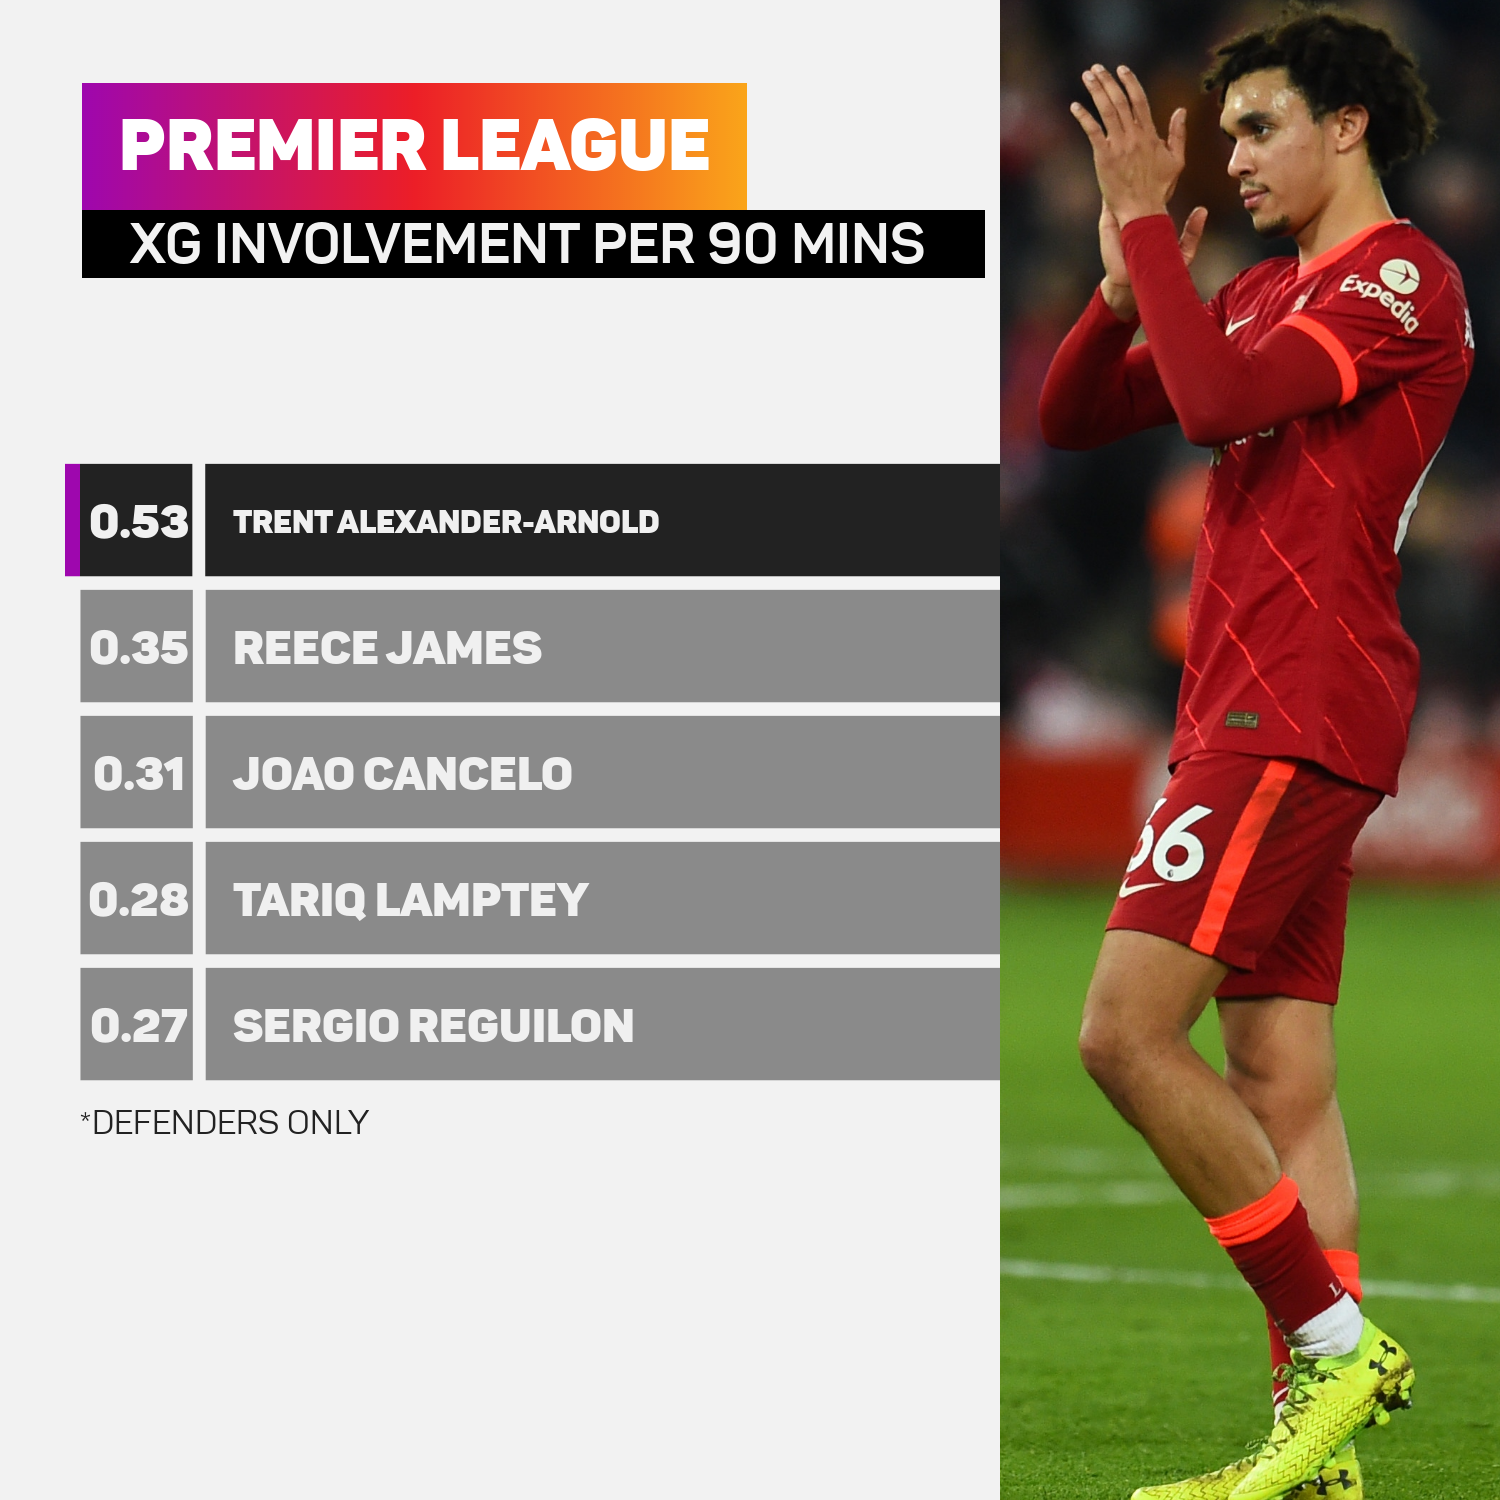 Premier League XG involvements per 90 mins - defenders